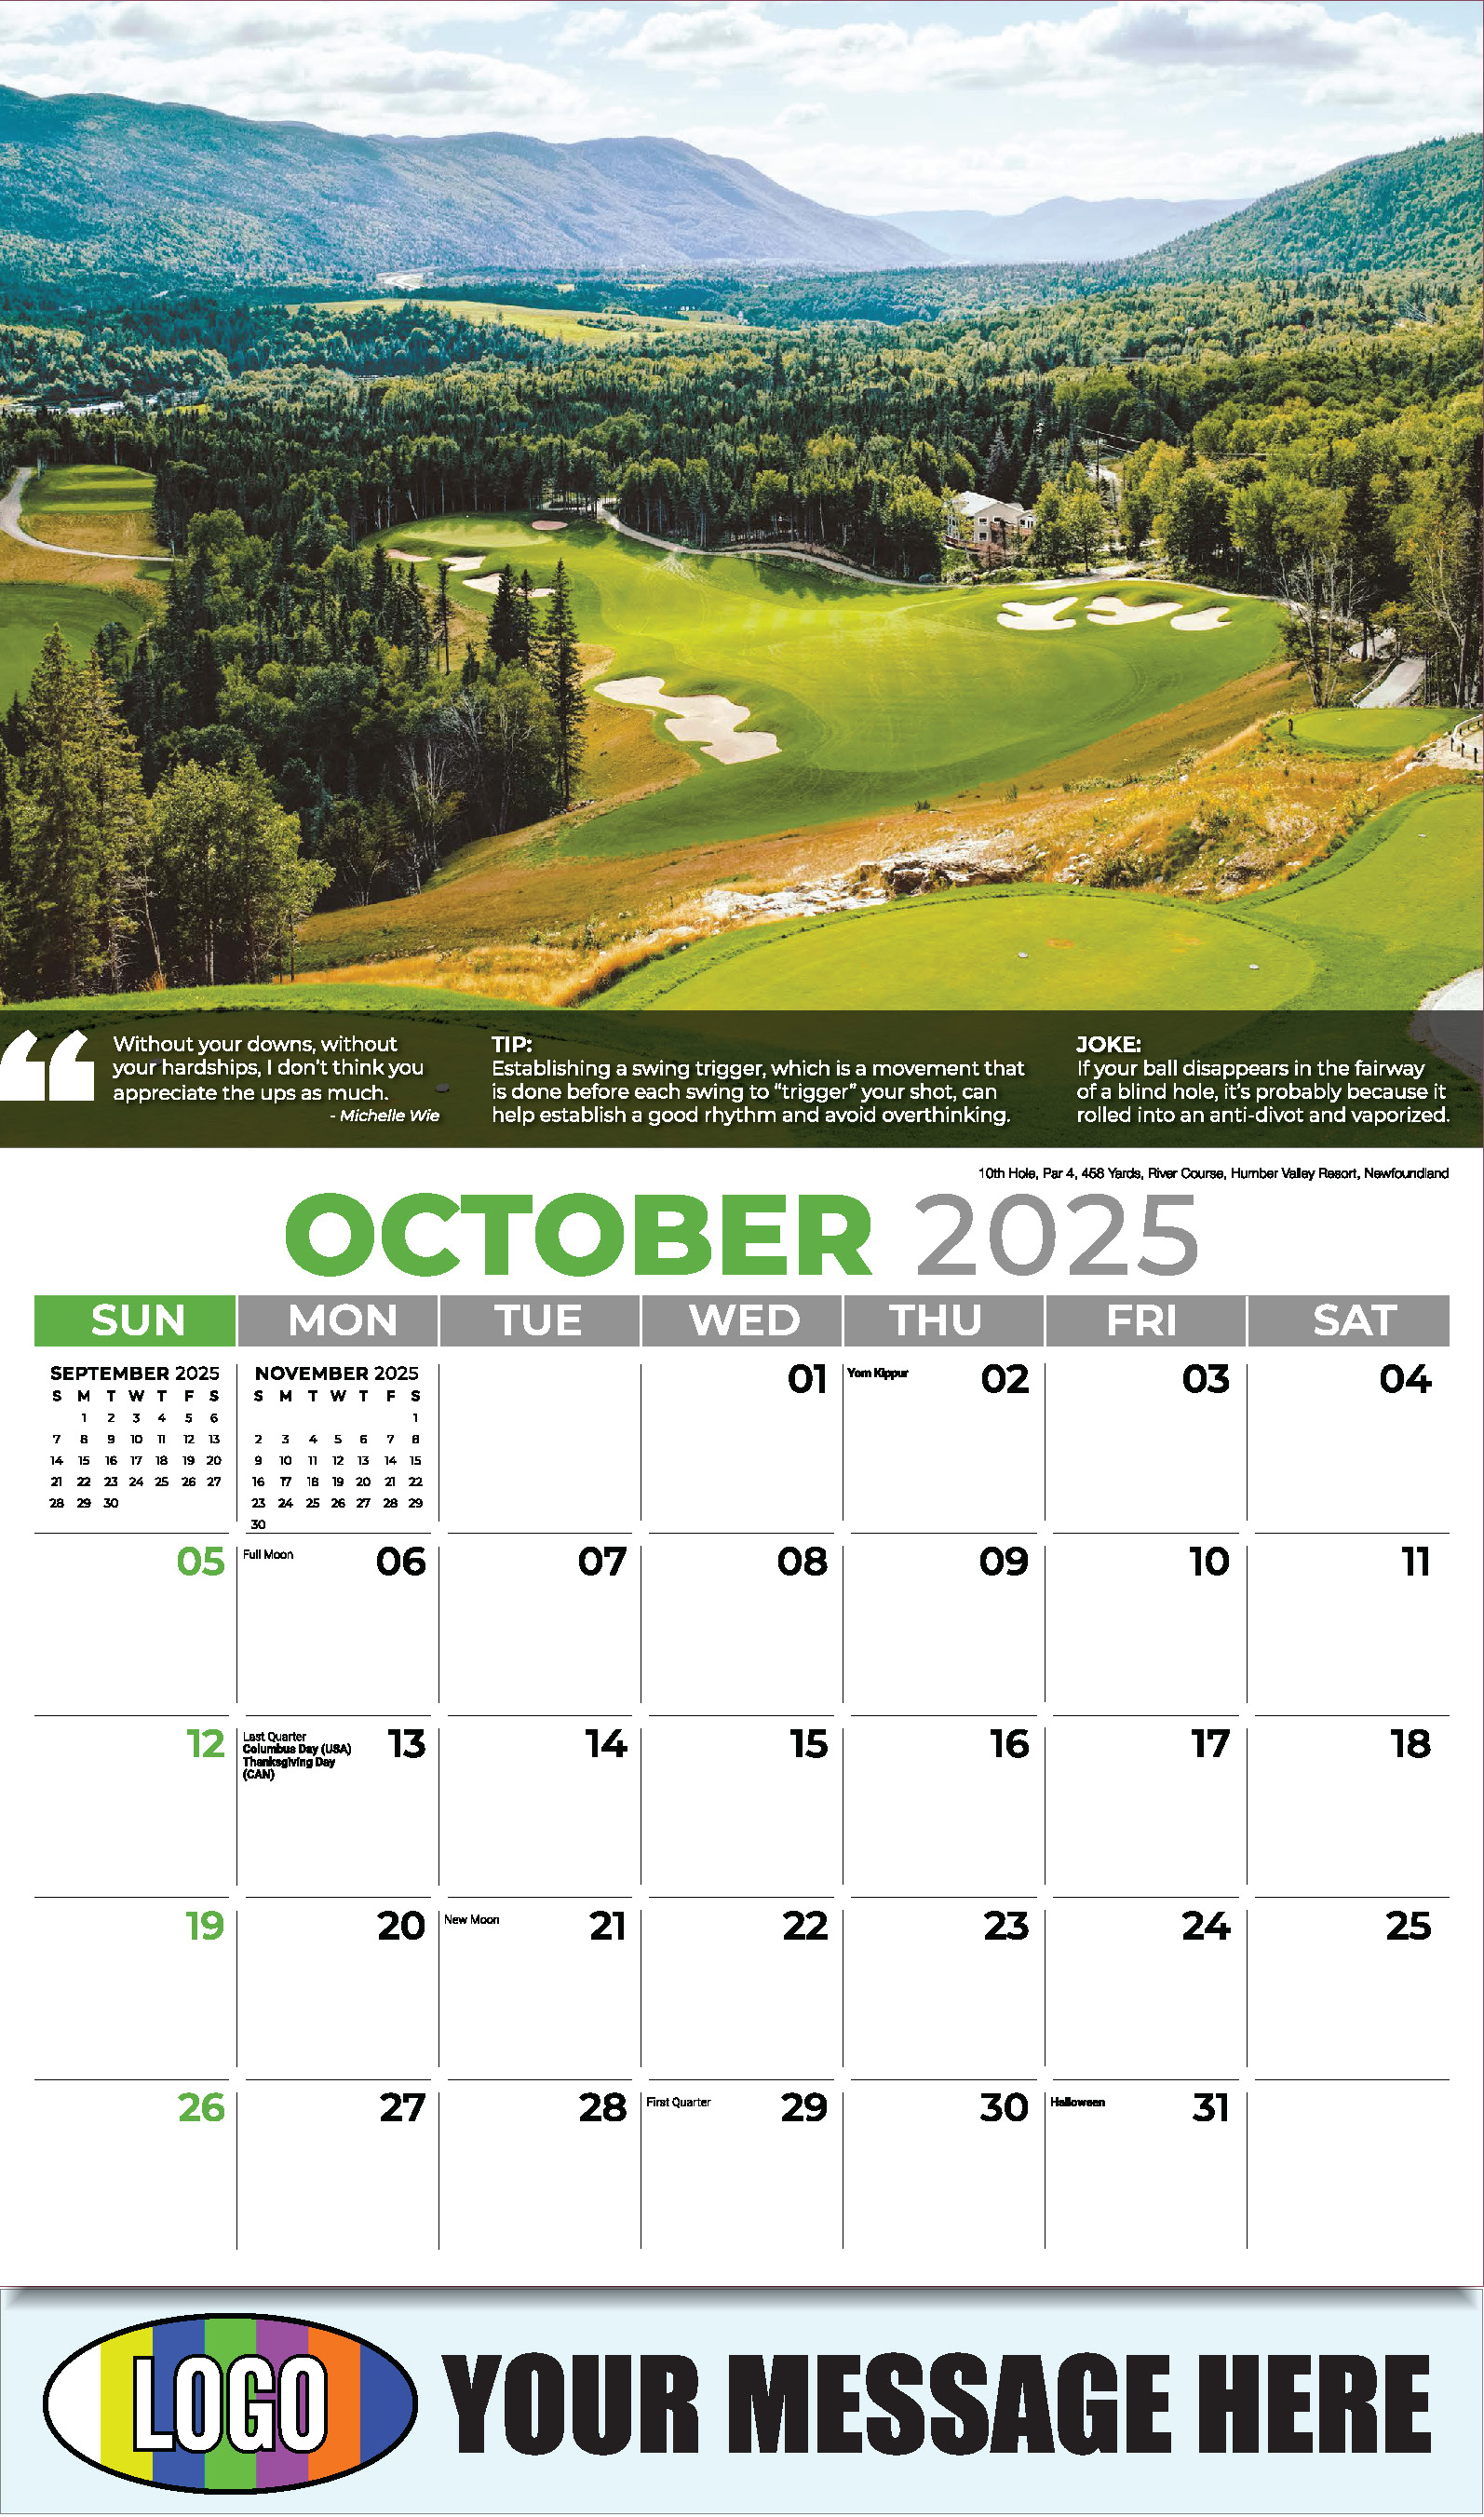 Golf Tips 2025 Business Promo Calendar - October